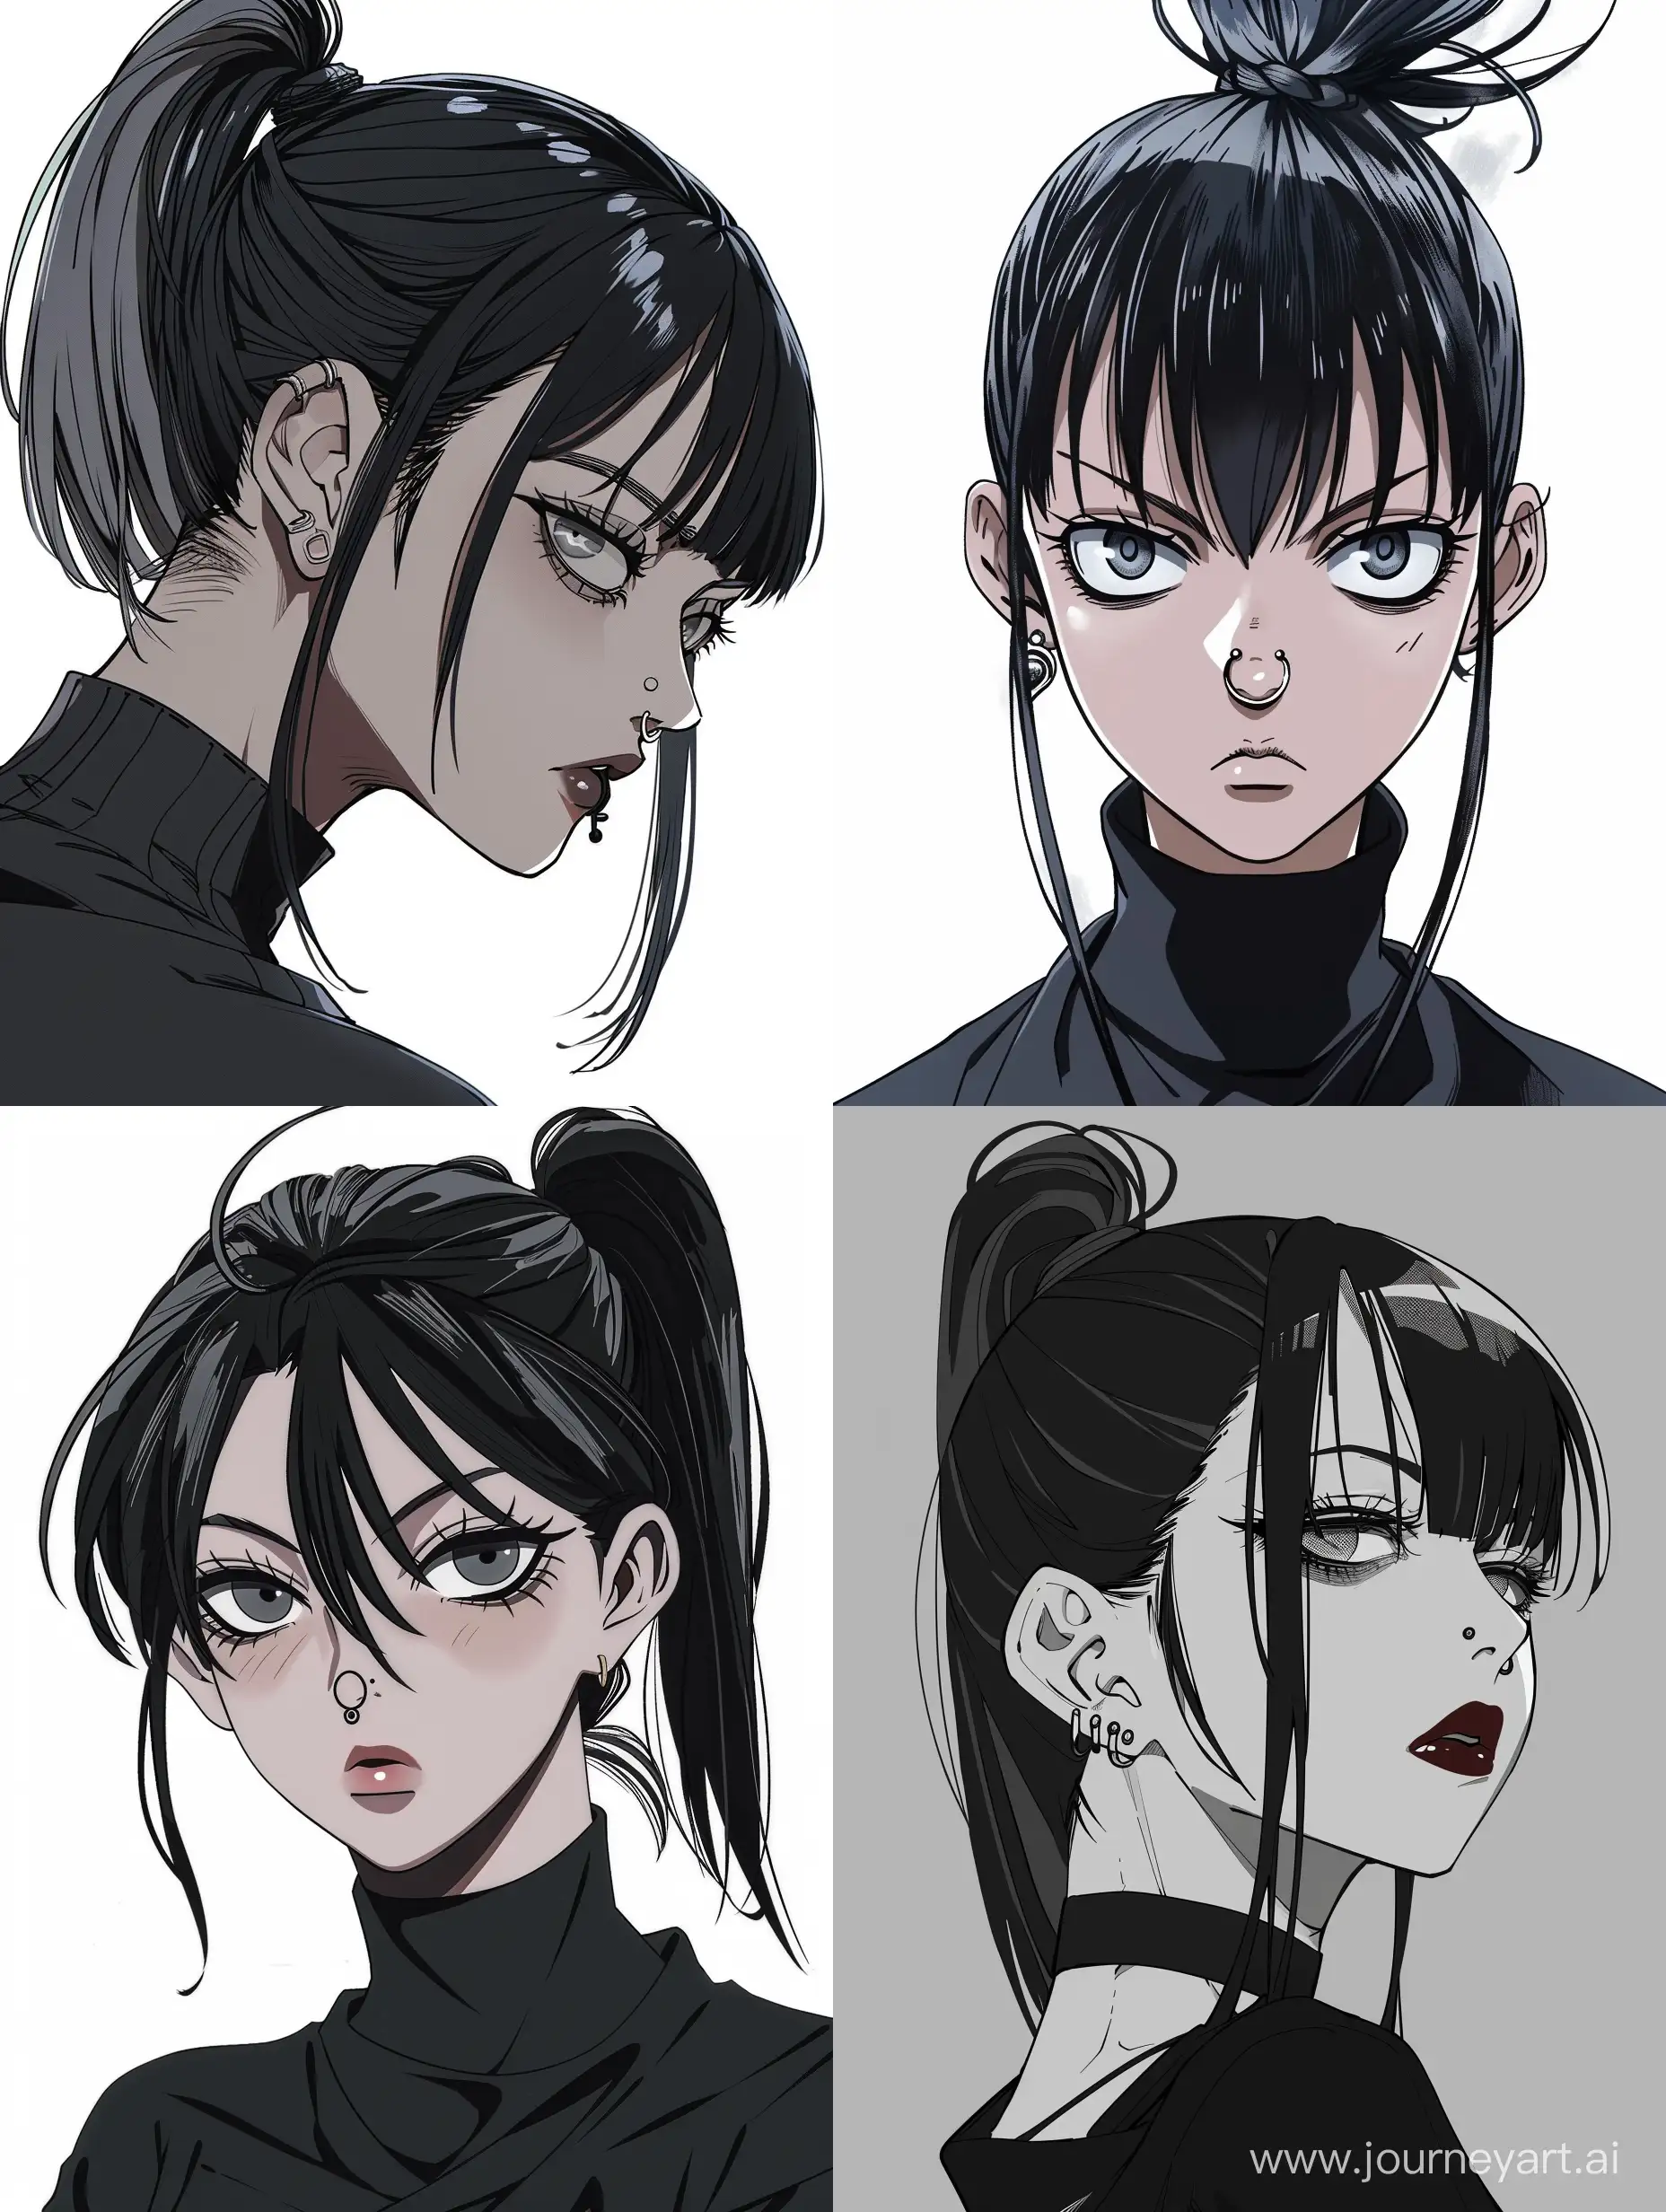 girl european face gray eyes, athletic build hair in a ponytail Anime Jujutsu Kaisen Yuki Tsukumo with black hair full lips and a nose earring